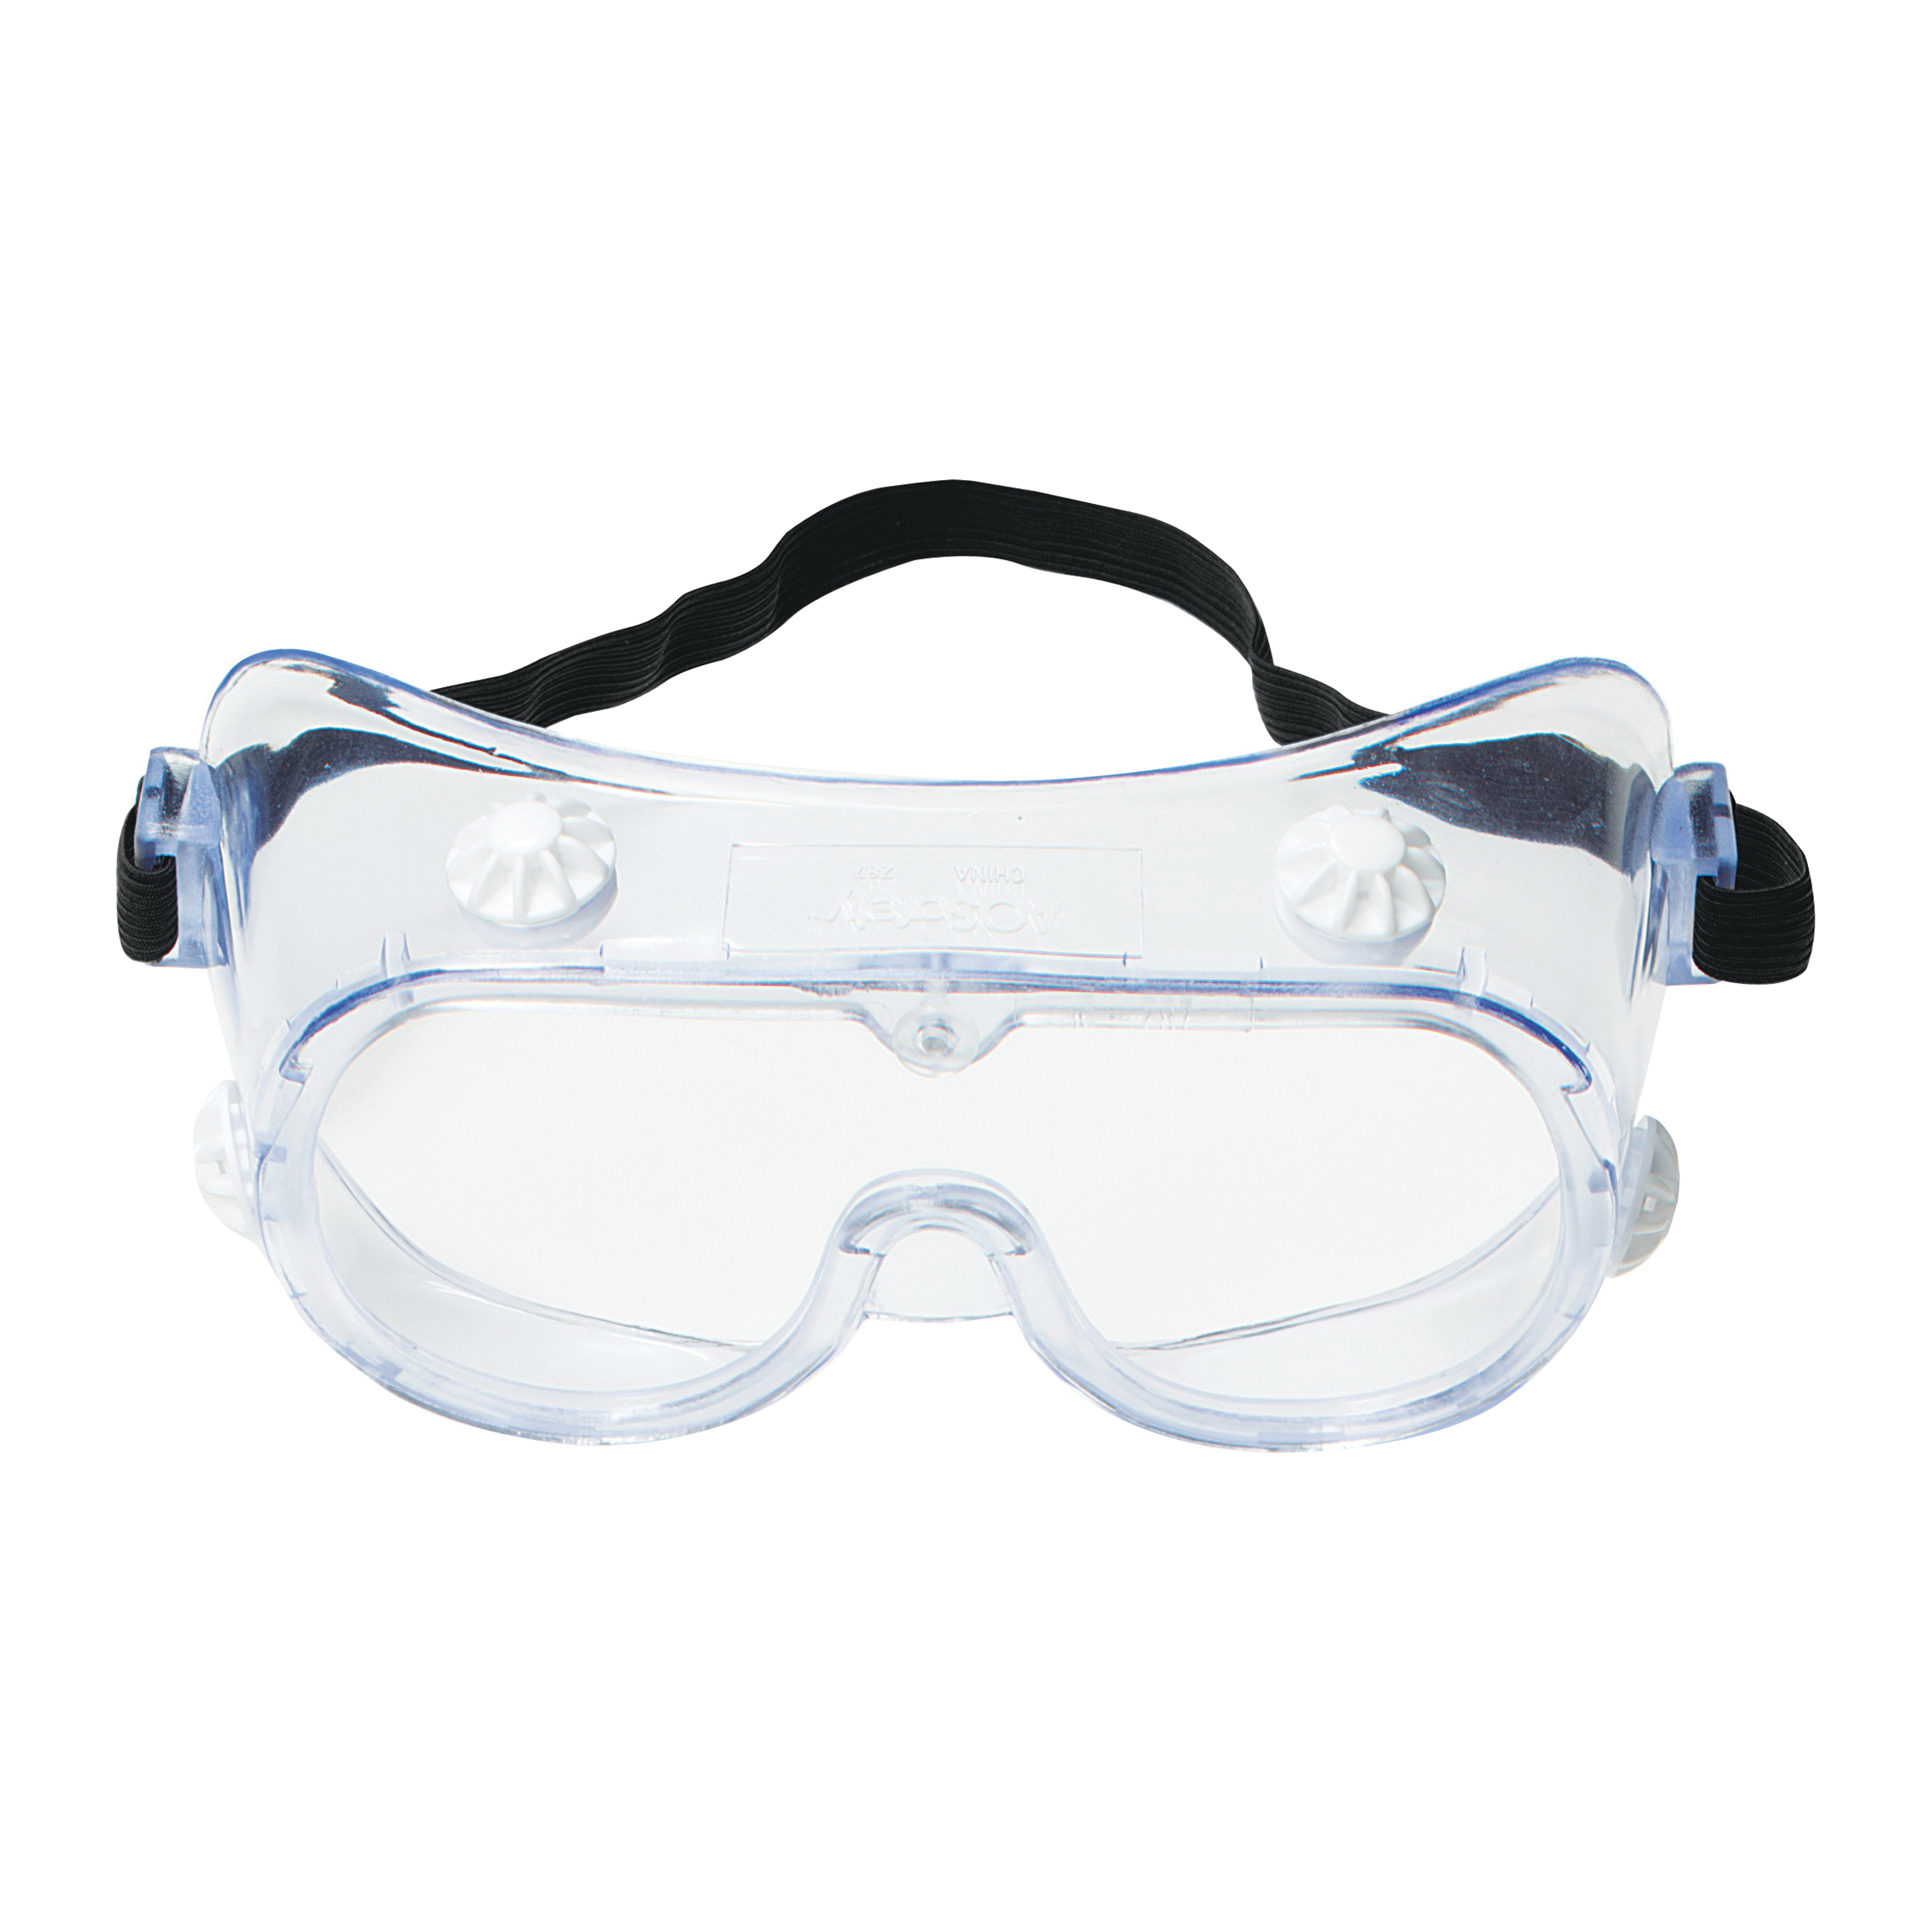 3M™ 078371-62140 Economy Indirect Vent Standard Protective Splash Goggles, Anti-Fog Clear Polycarbonate Lens, 99.9 % UV Protection, Elastic Strap, ANSI Z87.1-2003